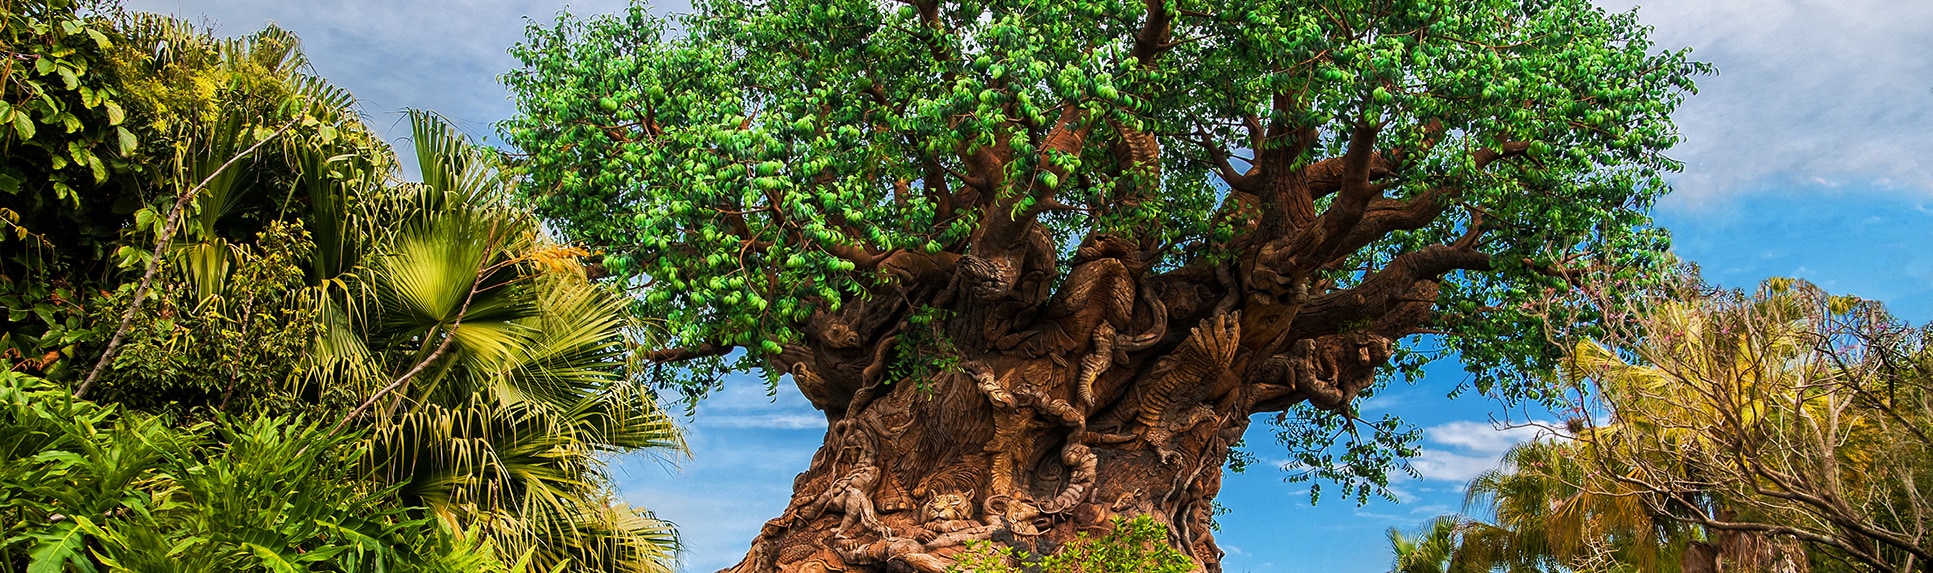 The Tree of Life at Disneys Animal Kingdom park